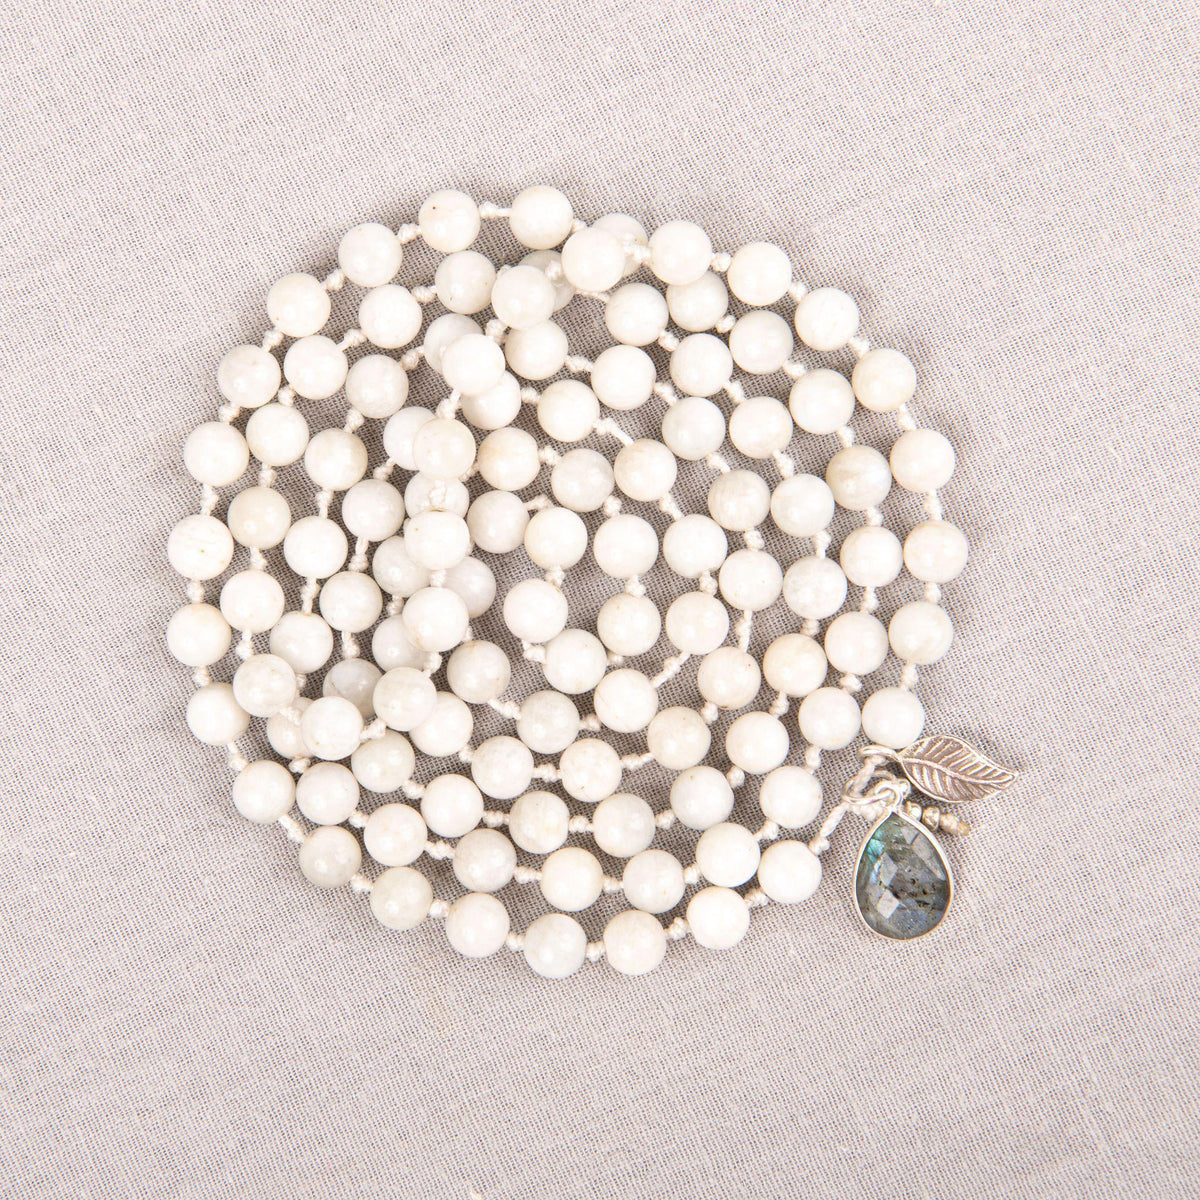 Moonstone Mala Necklace with Labradorite Charm and Silver Leaf Merakalpa Malas